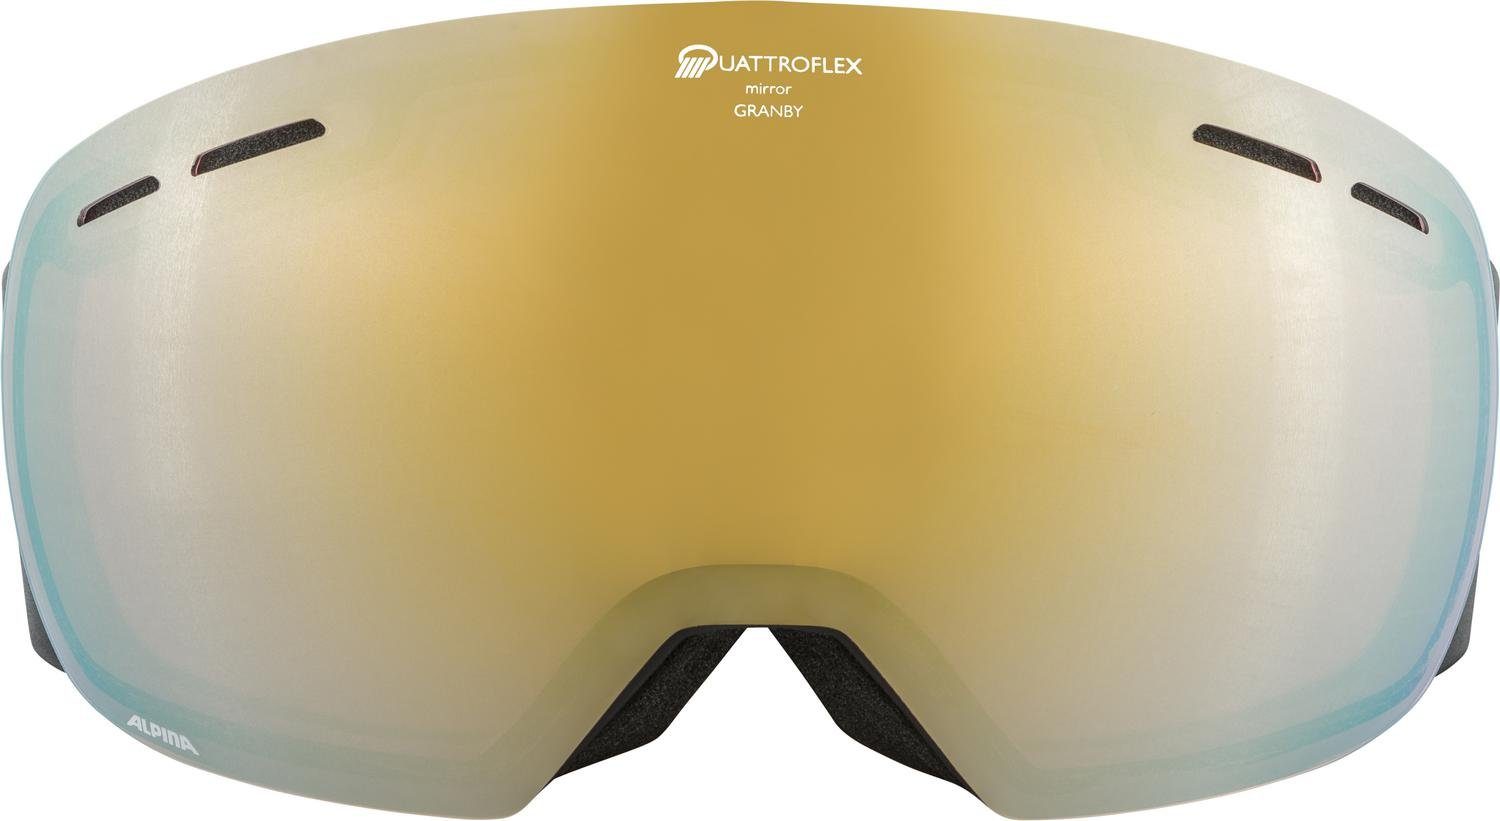 Skibrille GRANBY Q matt Alpina Sports black